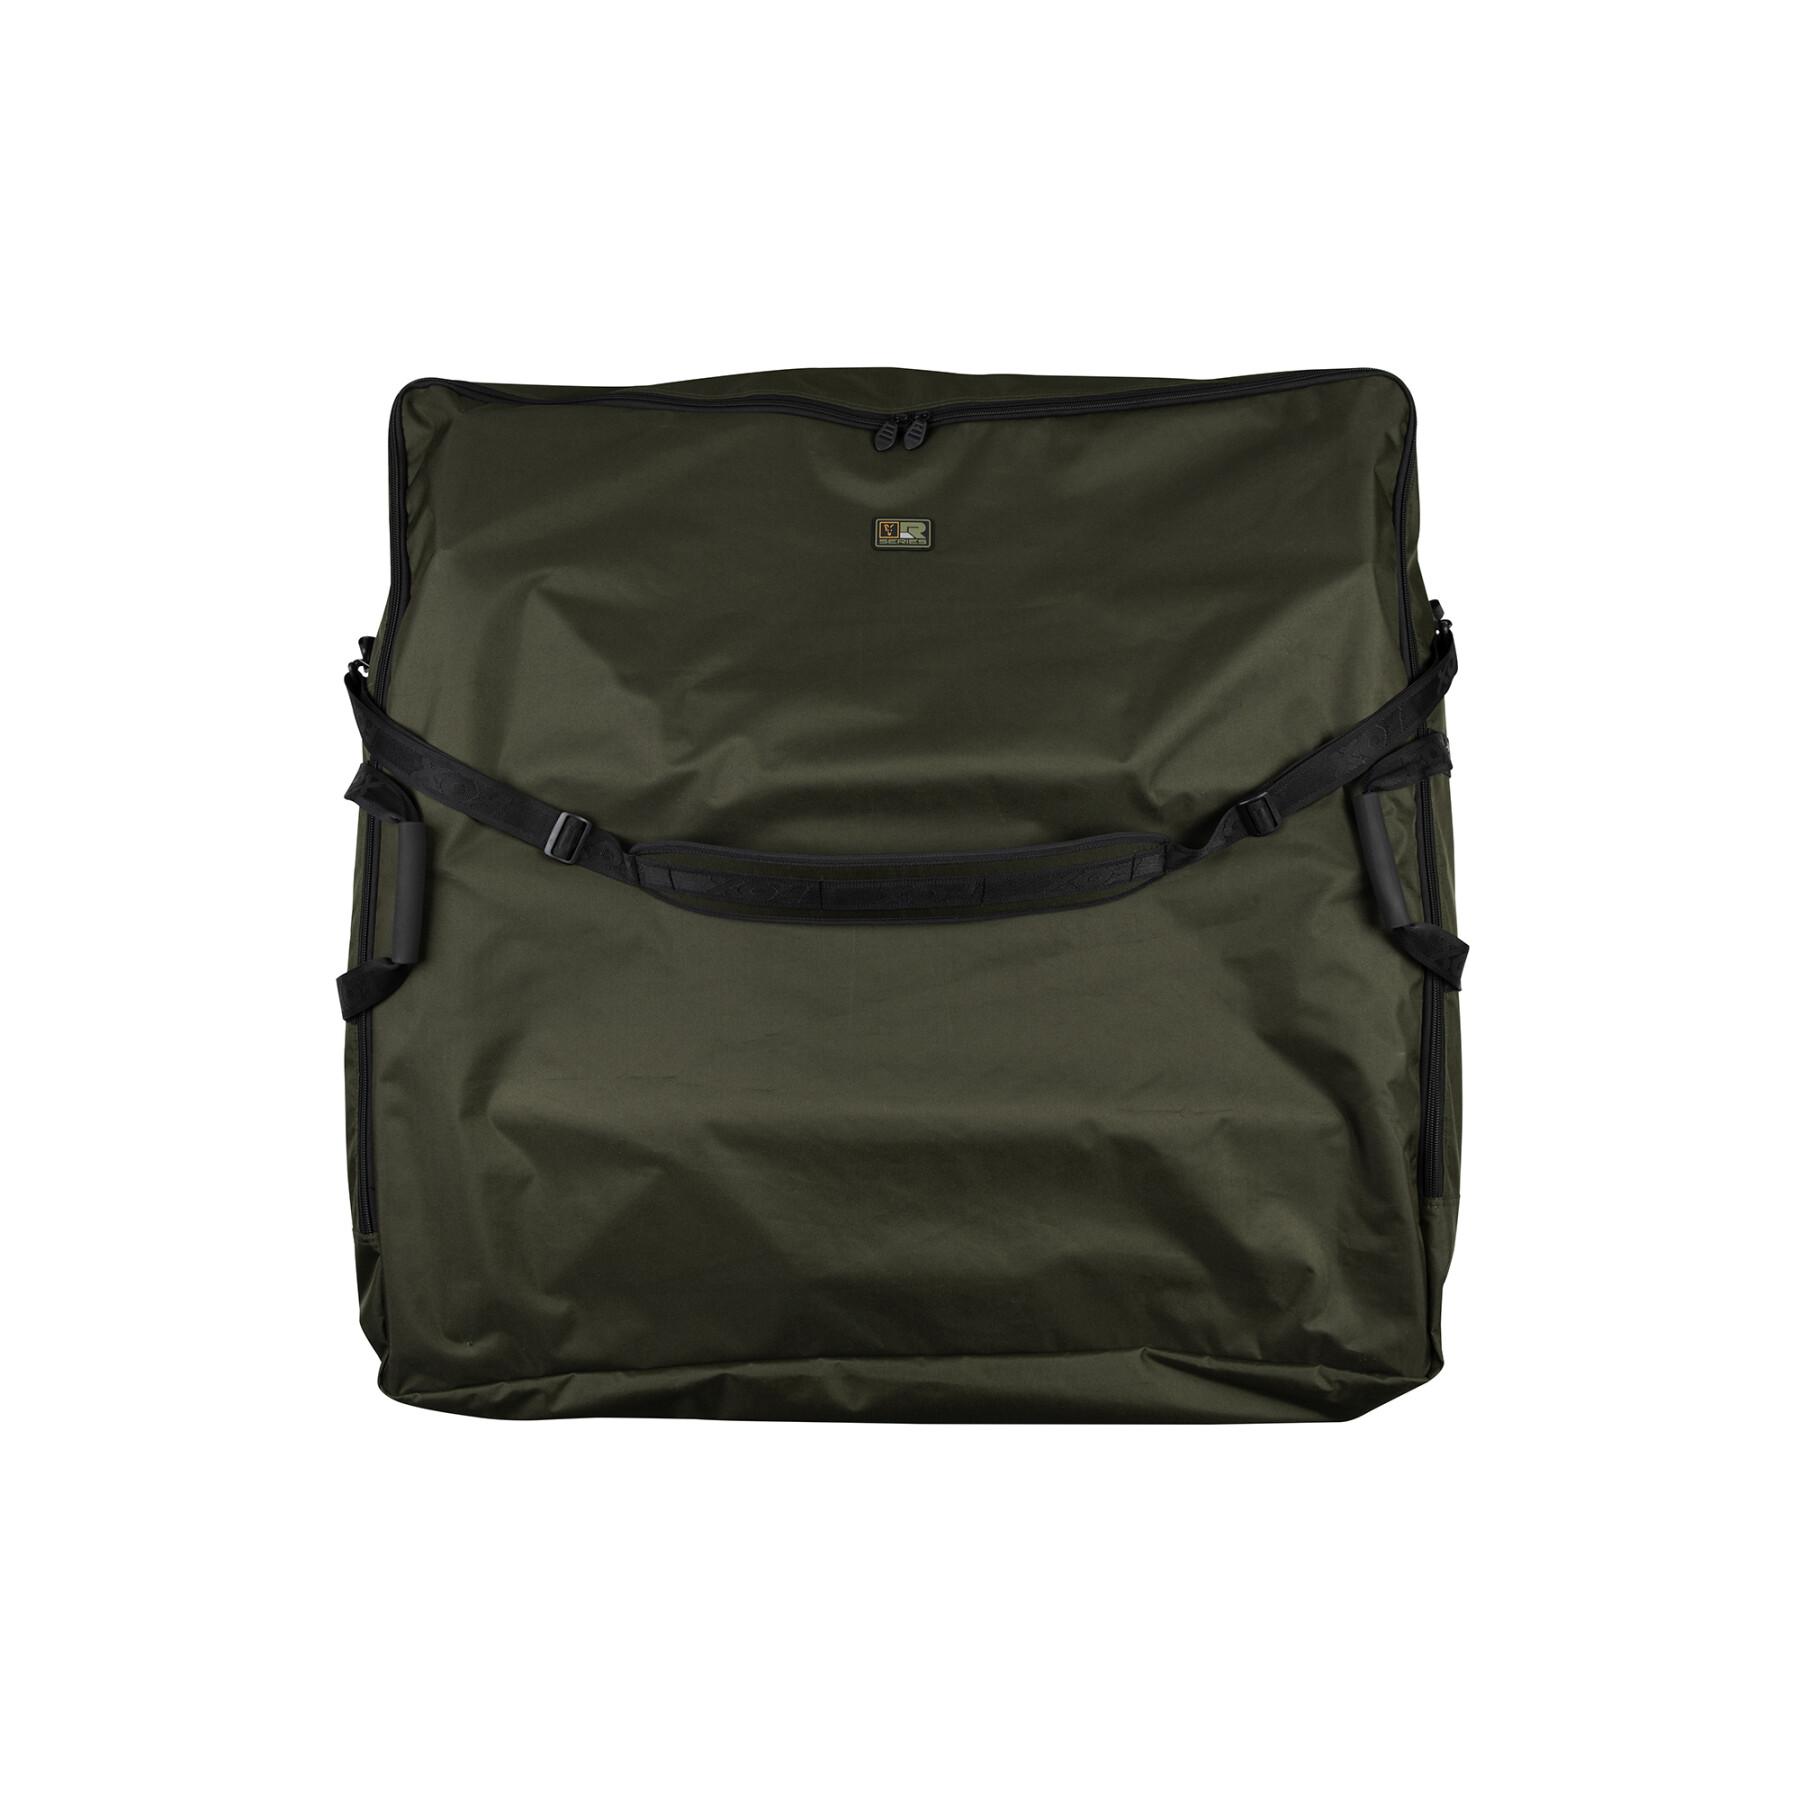 Fishing bag Fox R-Series Bedchair